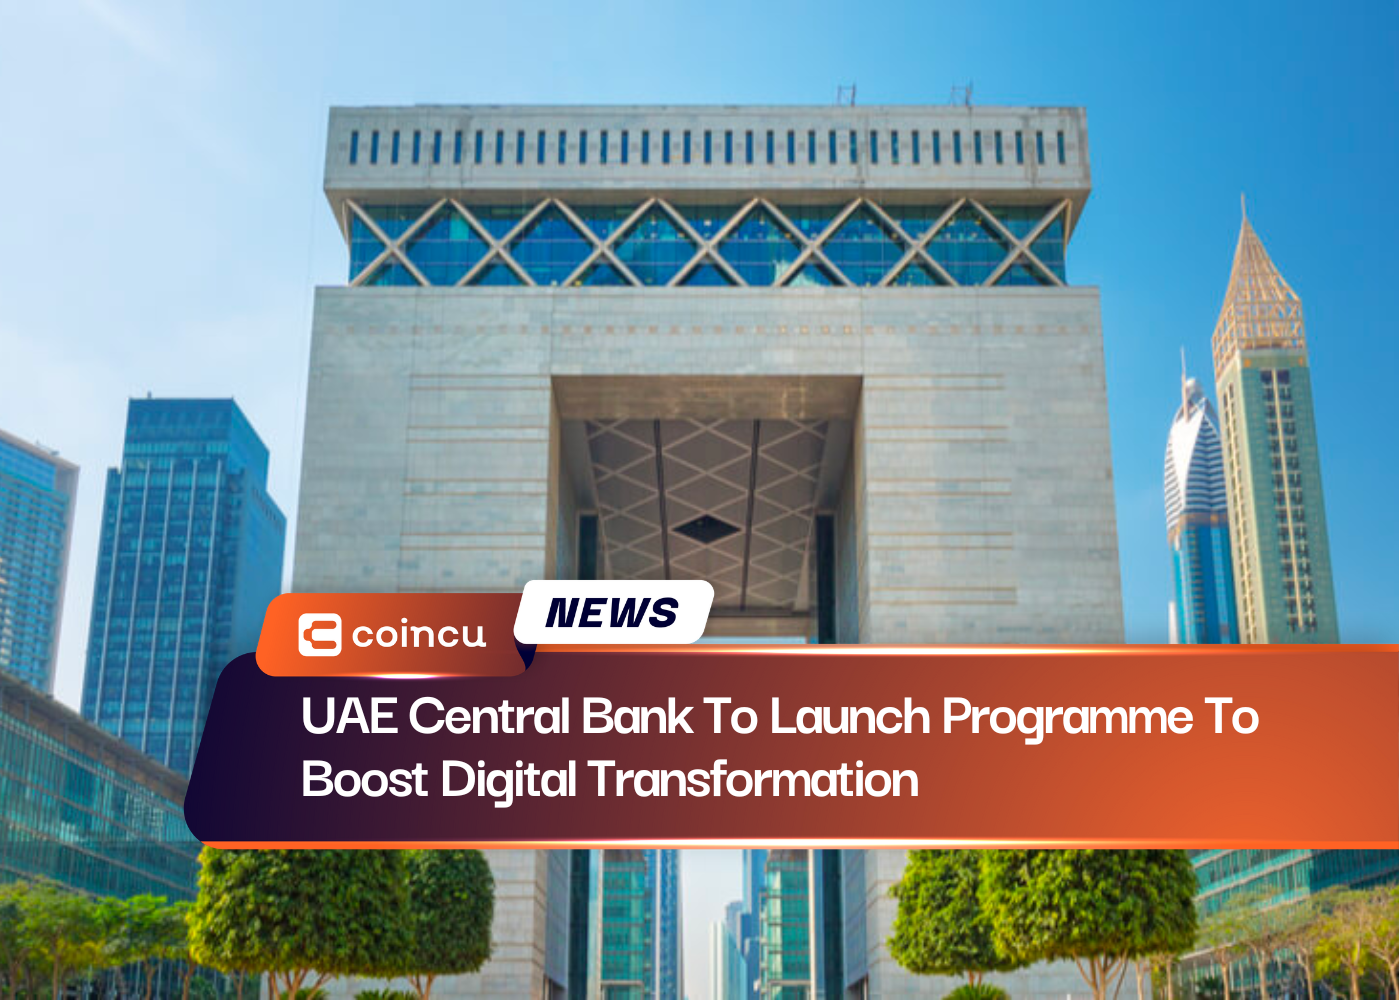 UAE中央銀行、デジタルトランスフォーメーションを促進するプログラムを開始へ